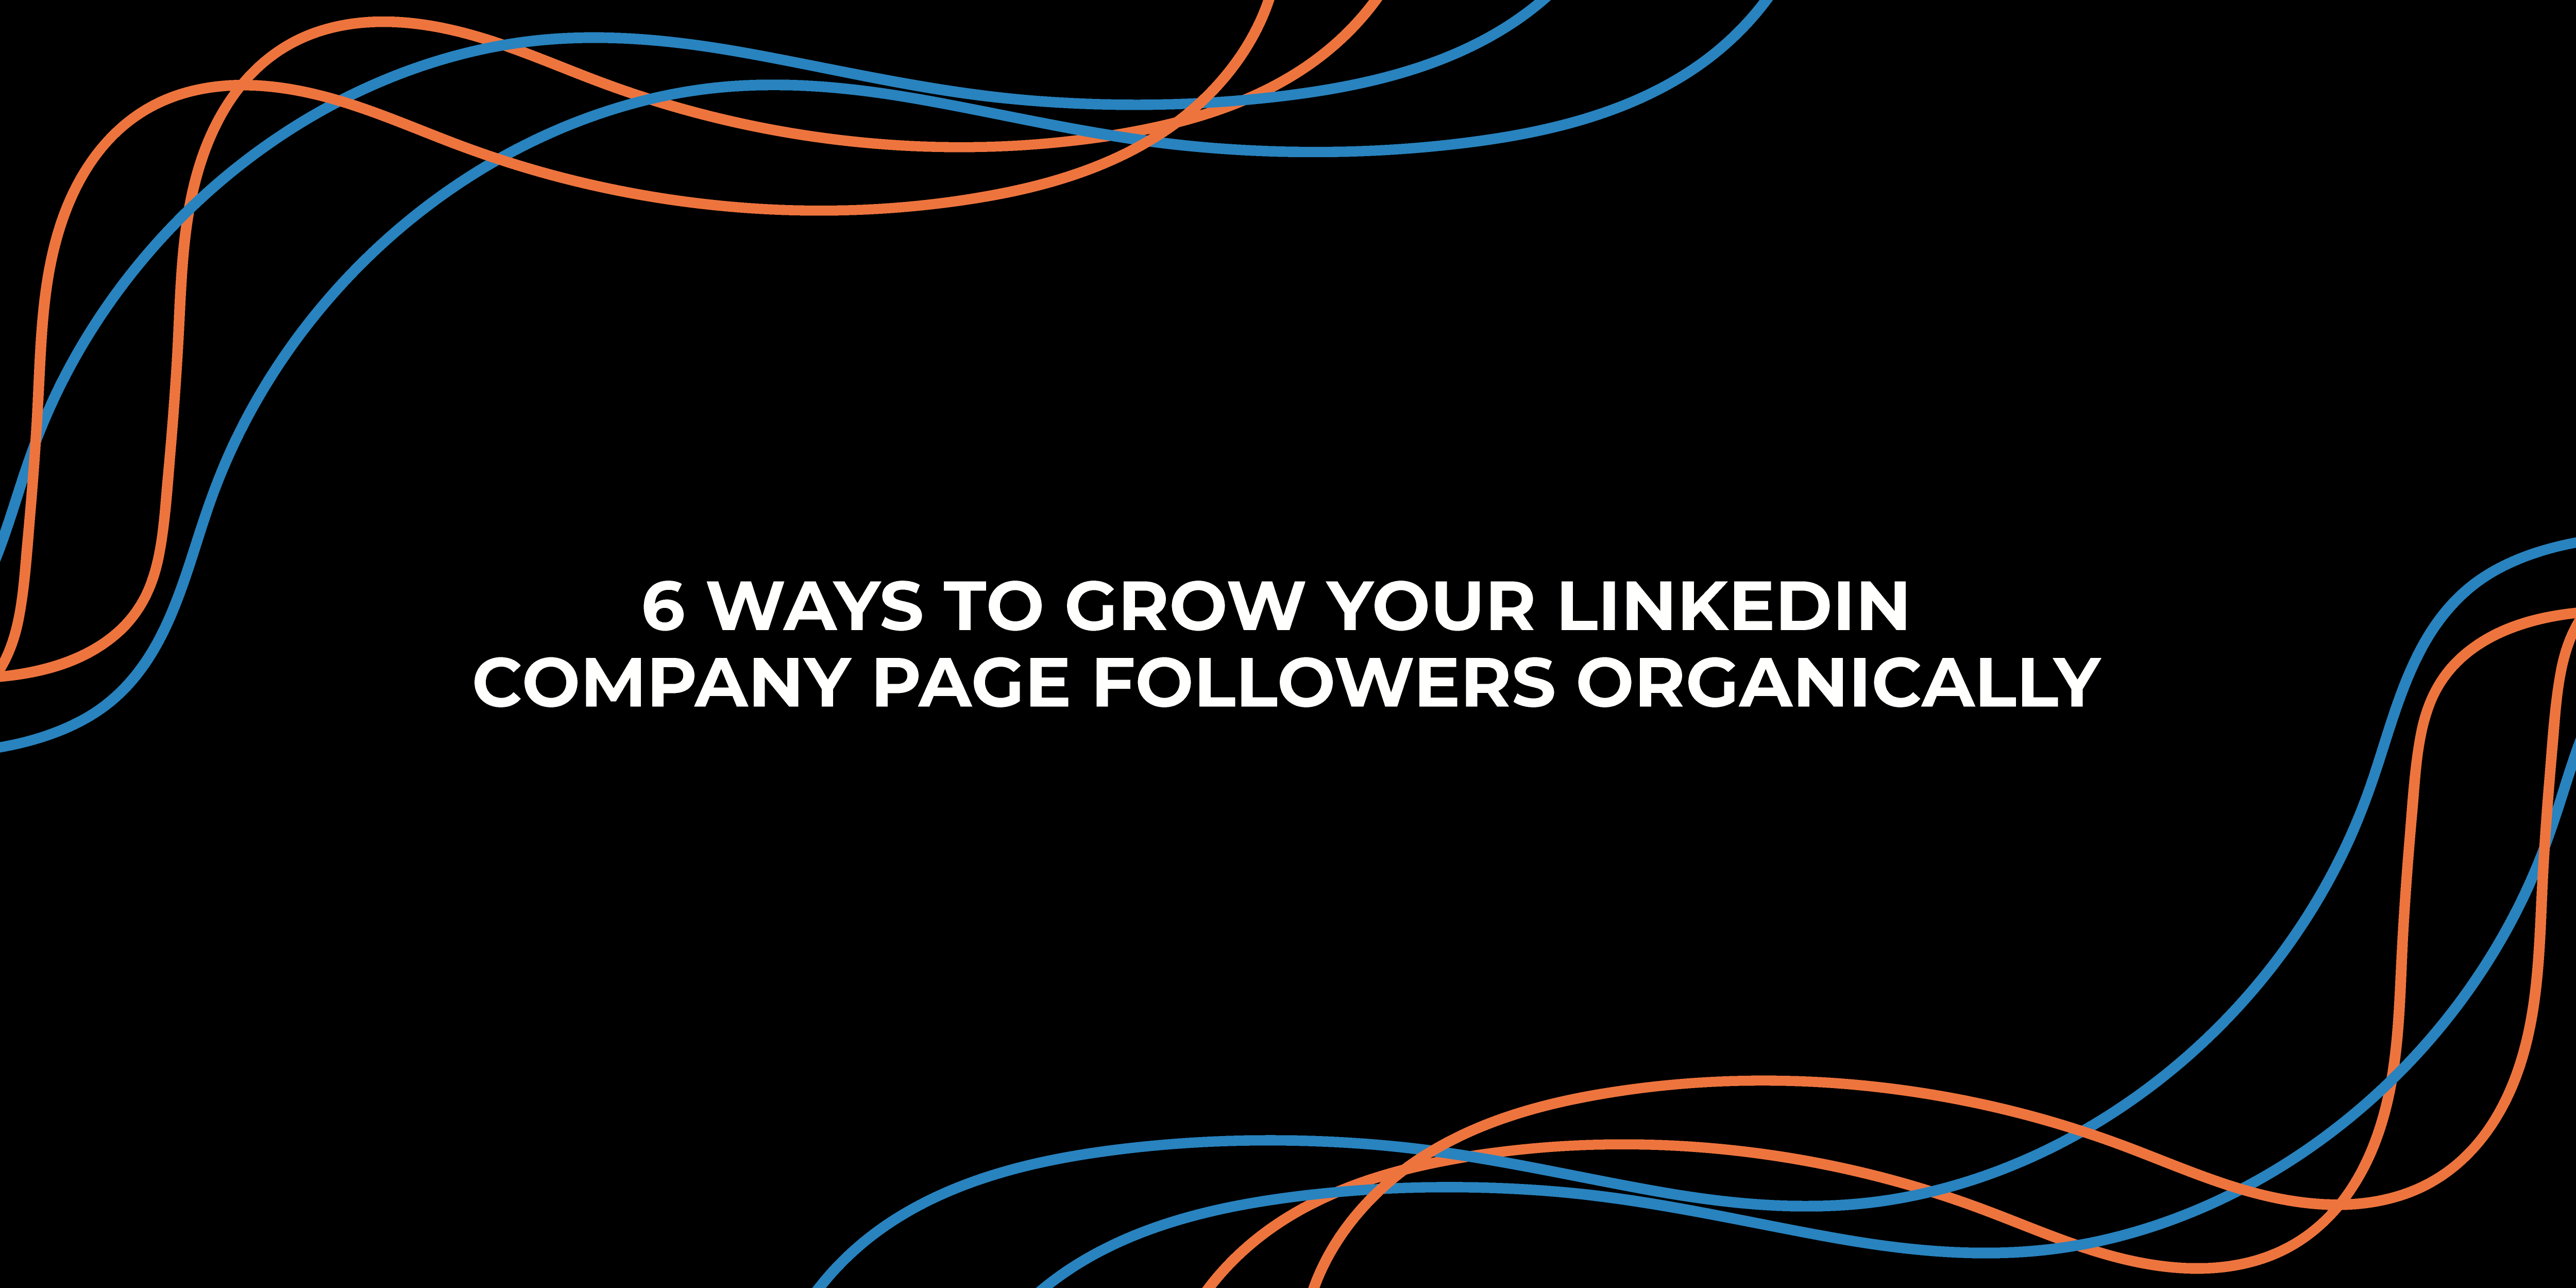 6 Ways To Grow Your LinkedIn Company Page Followers Organically